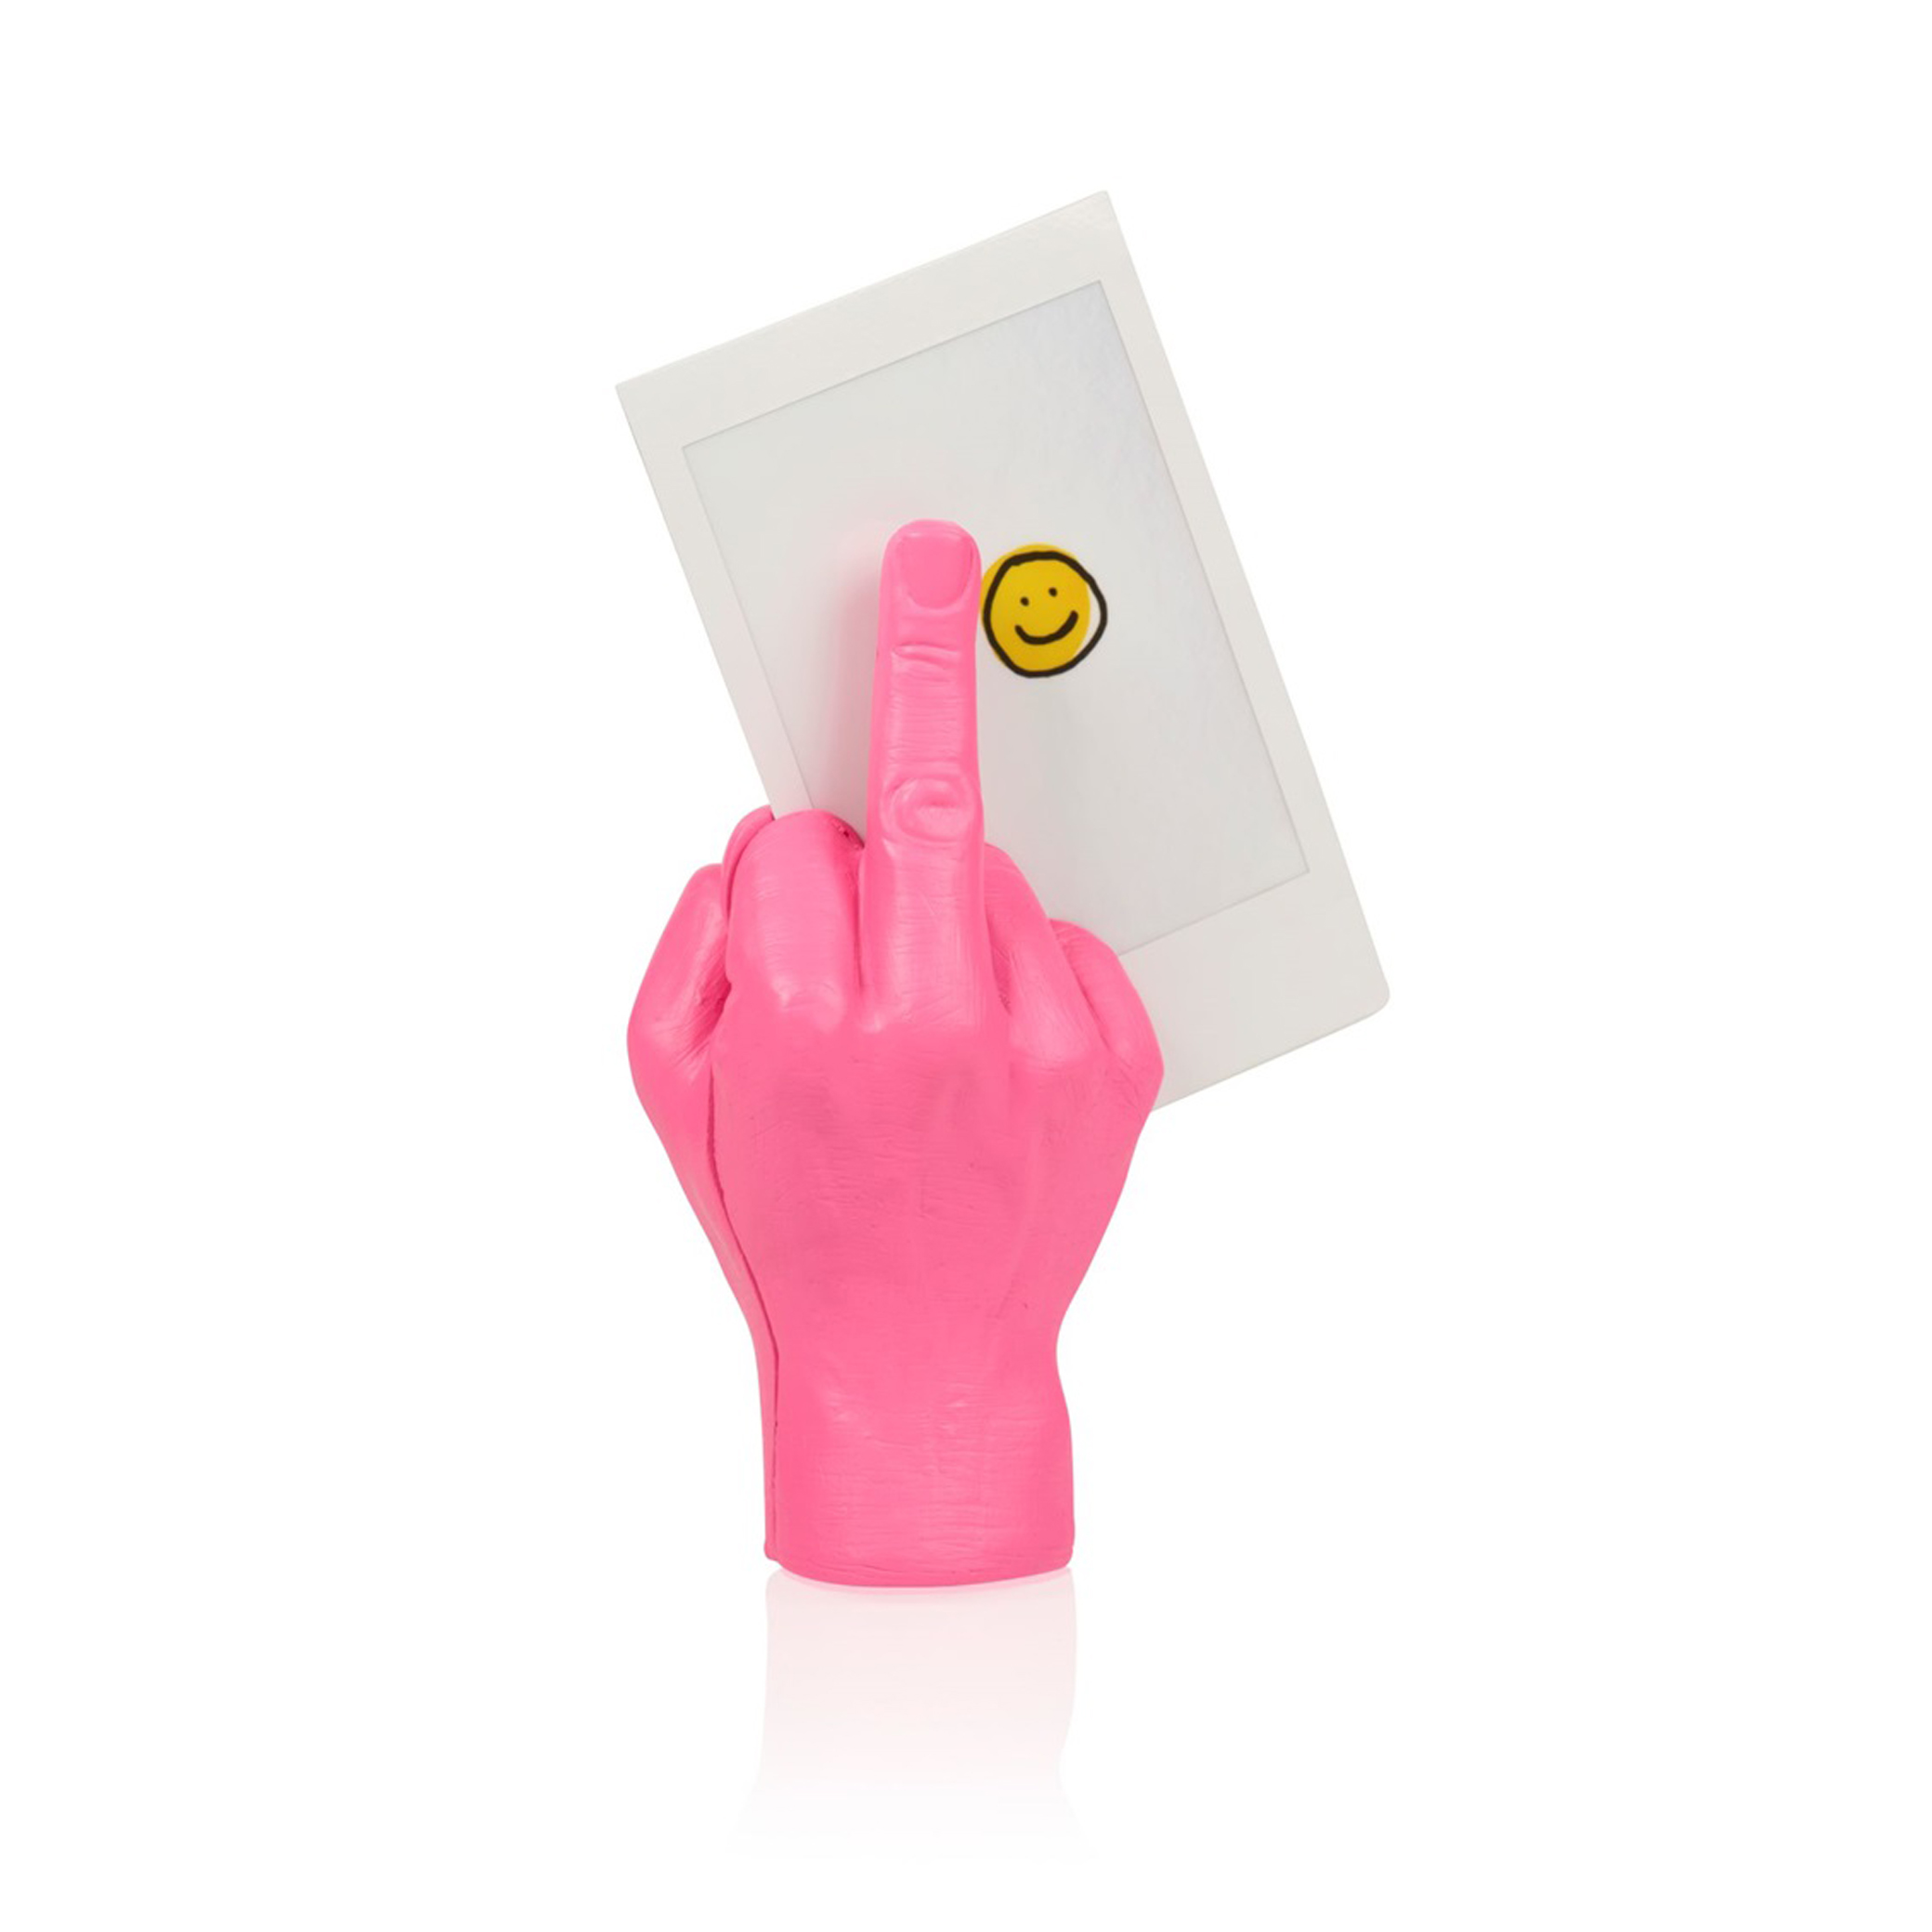 Bitten Design 'The Finger' Photo Holder - Pink